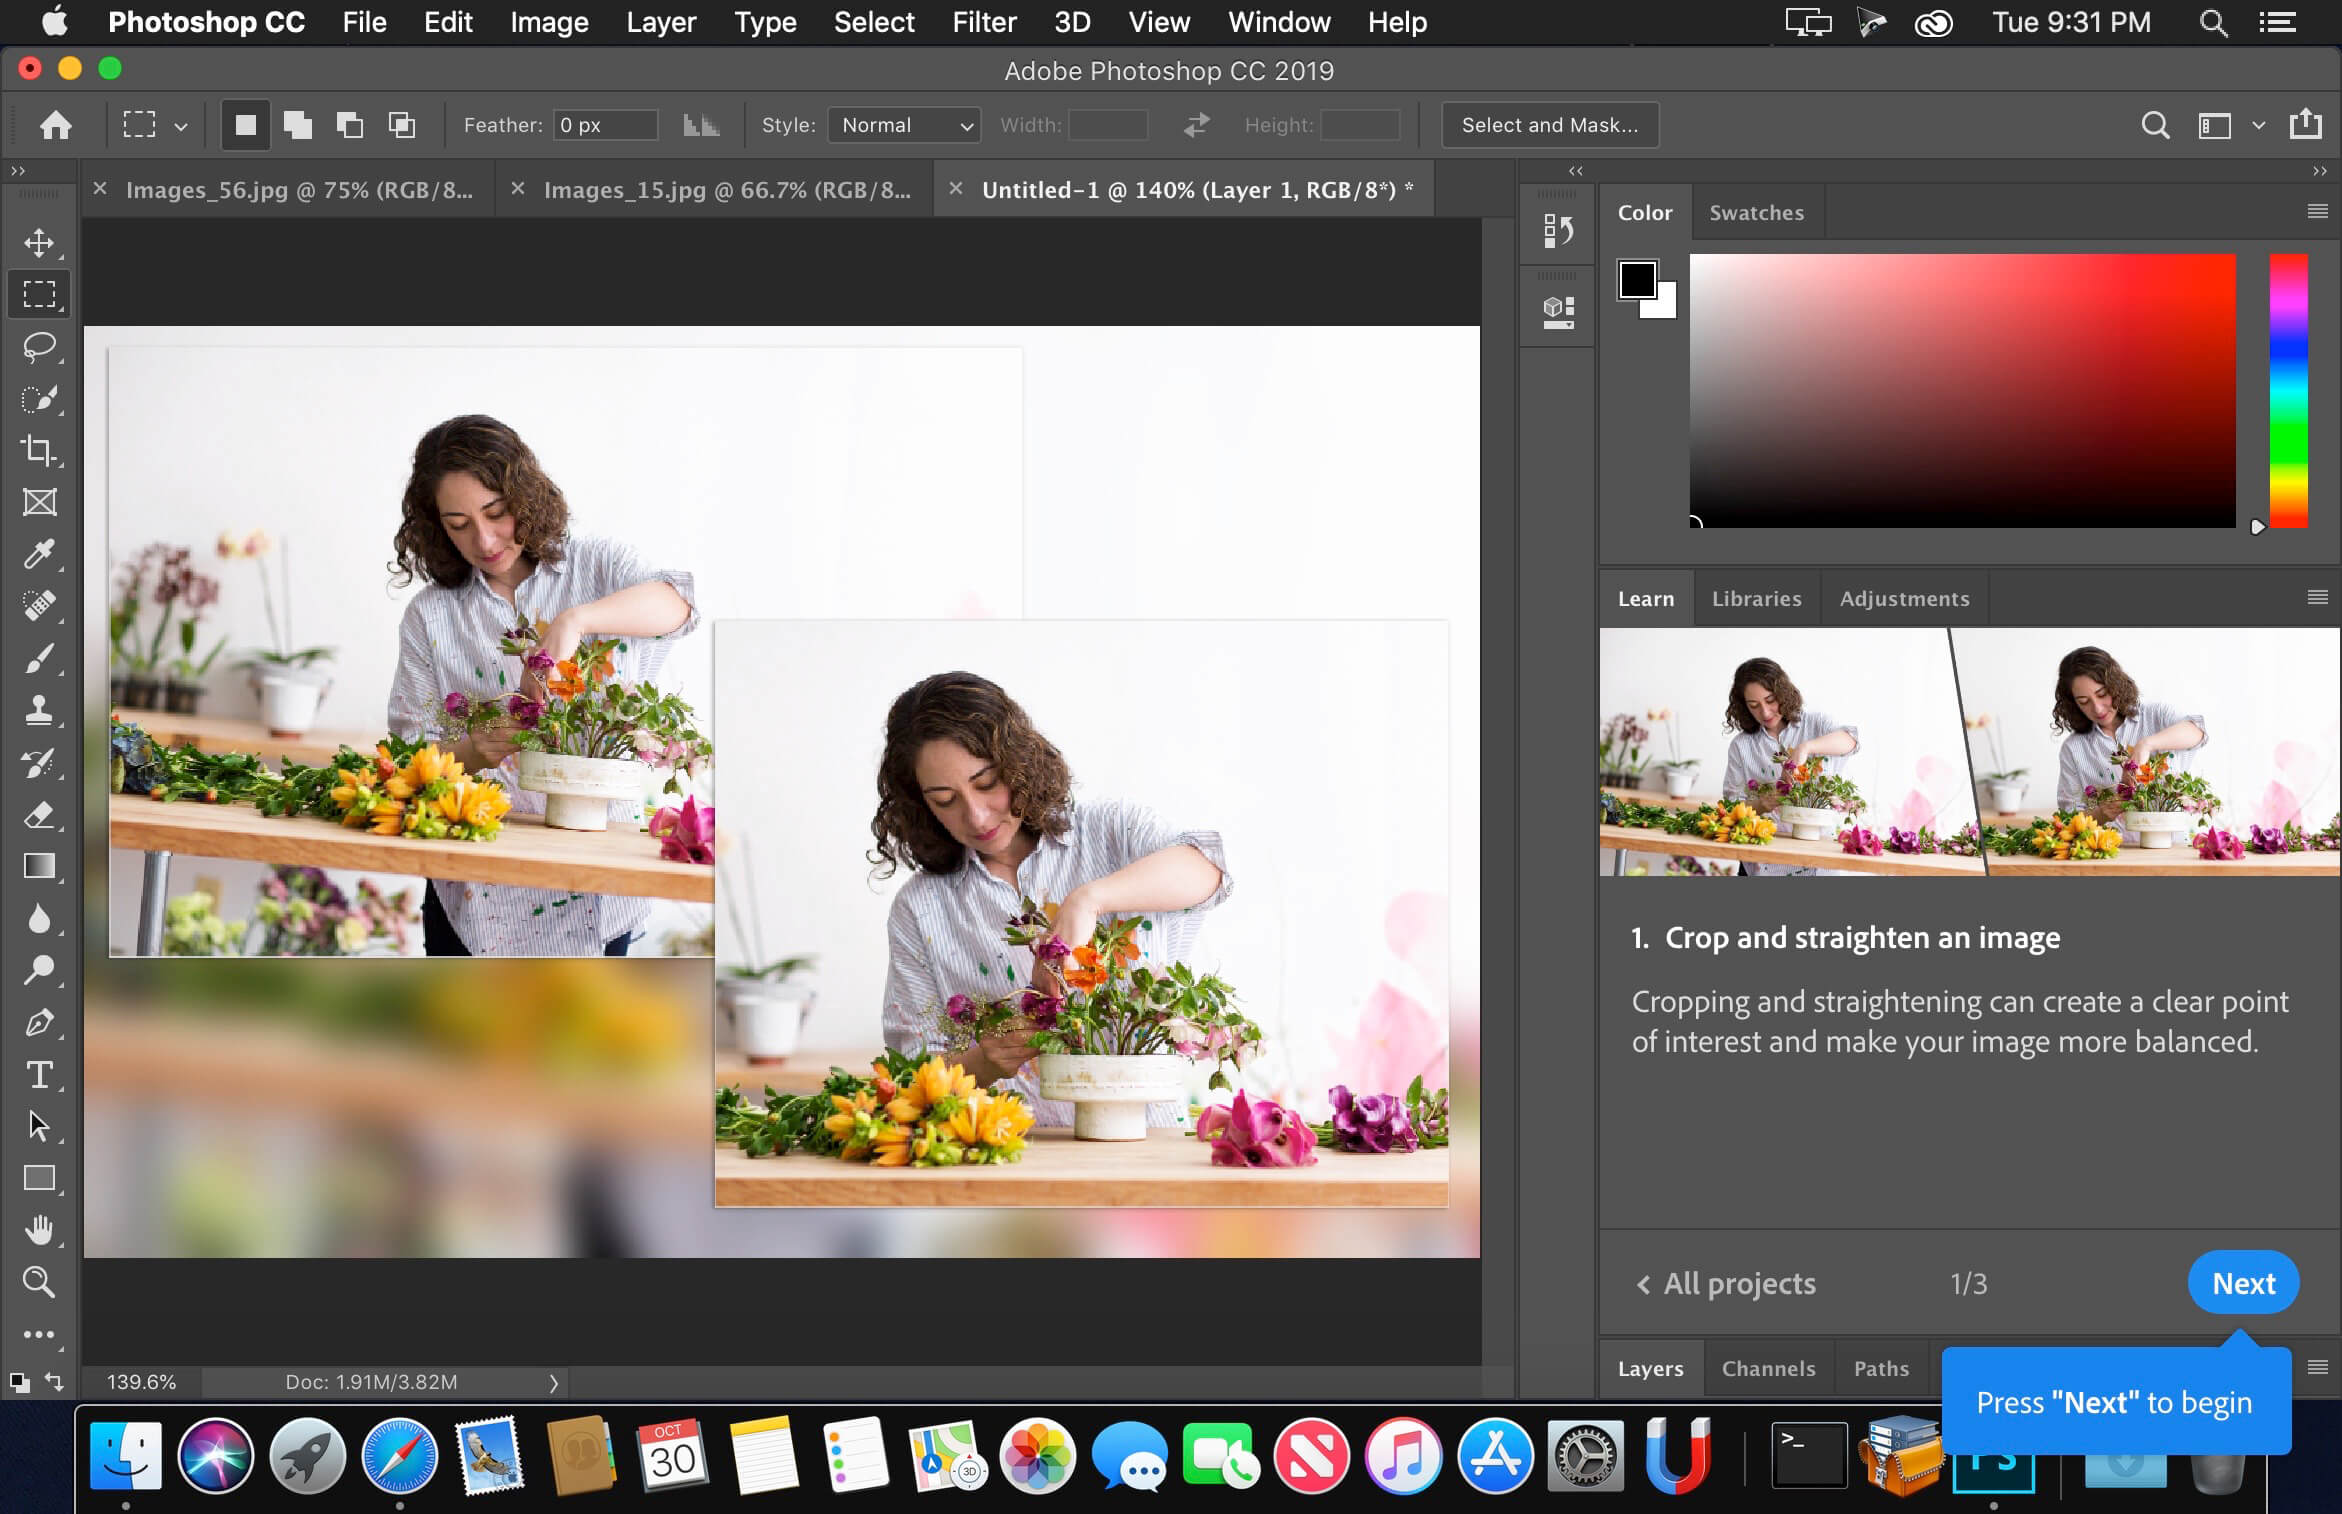 Adobe Photoshop CC 2019 for Mac Workspace (2019)